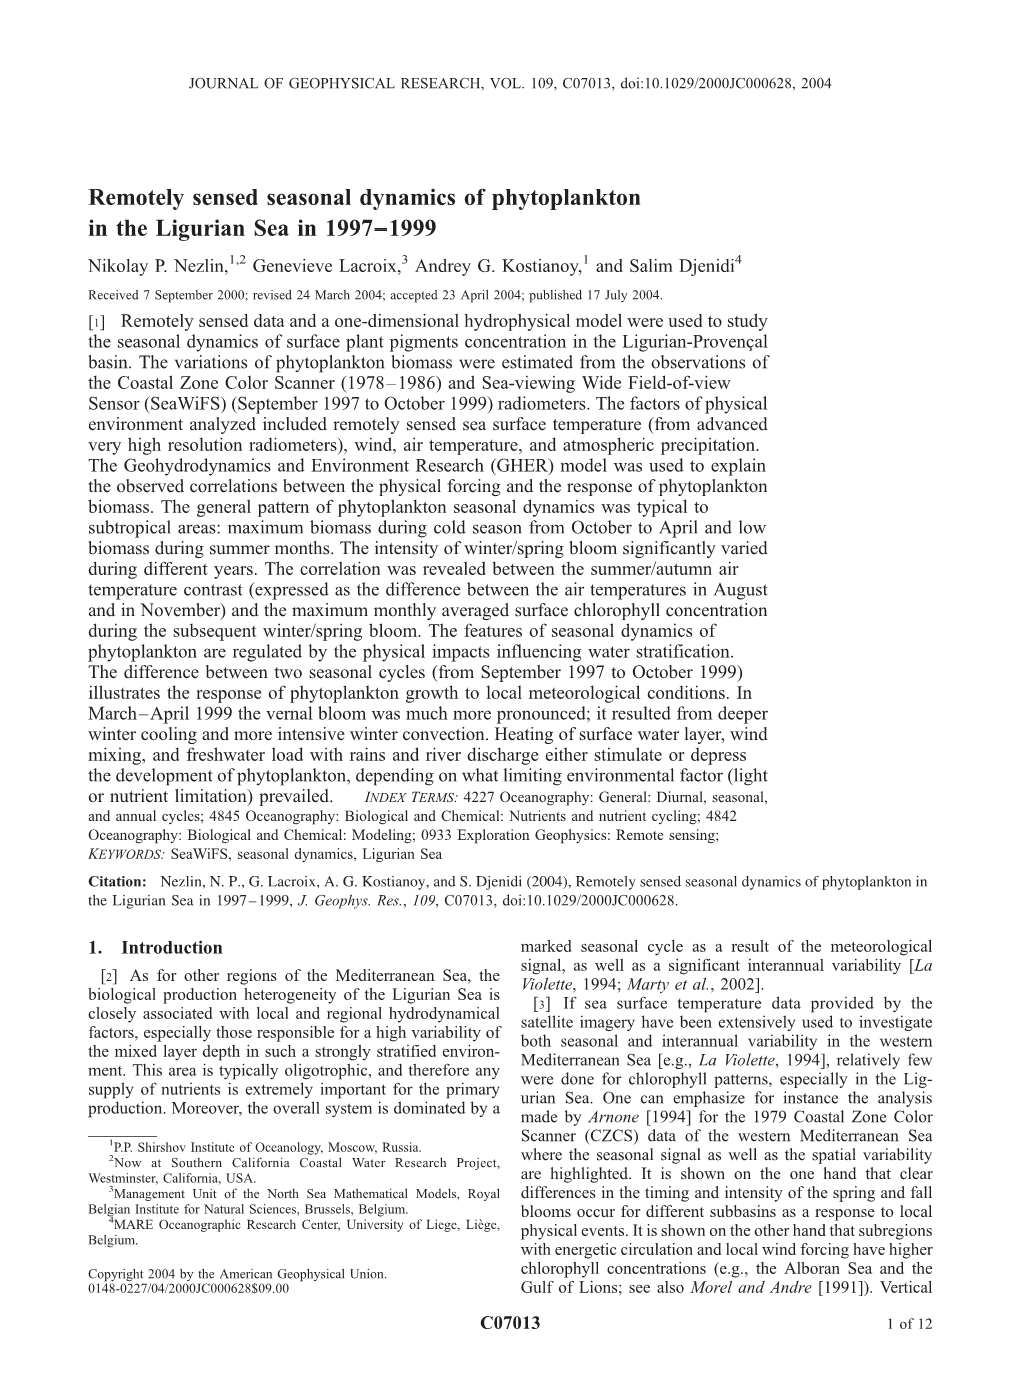 Remotely Sensed Seasonal Dynamics of Phytoplankton in the Ligurian Sea in 1997––1999 Nikolay P